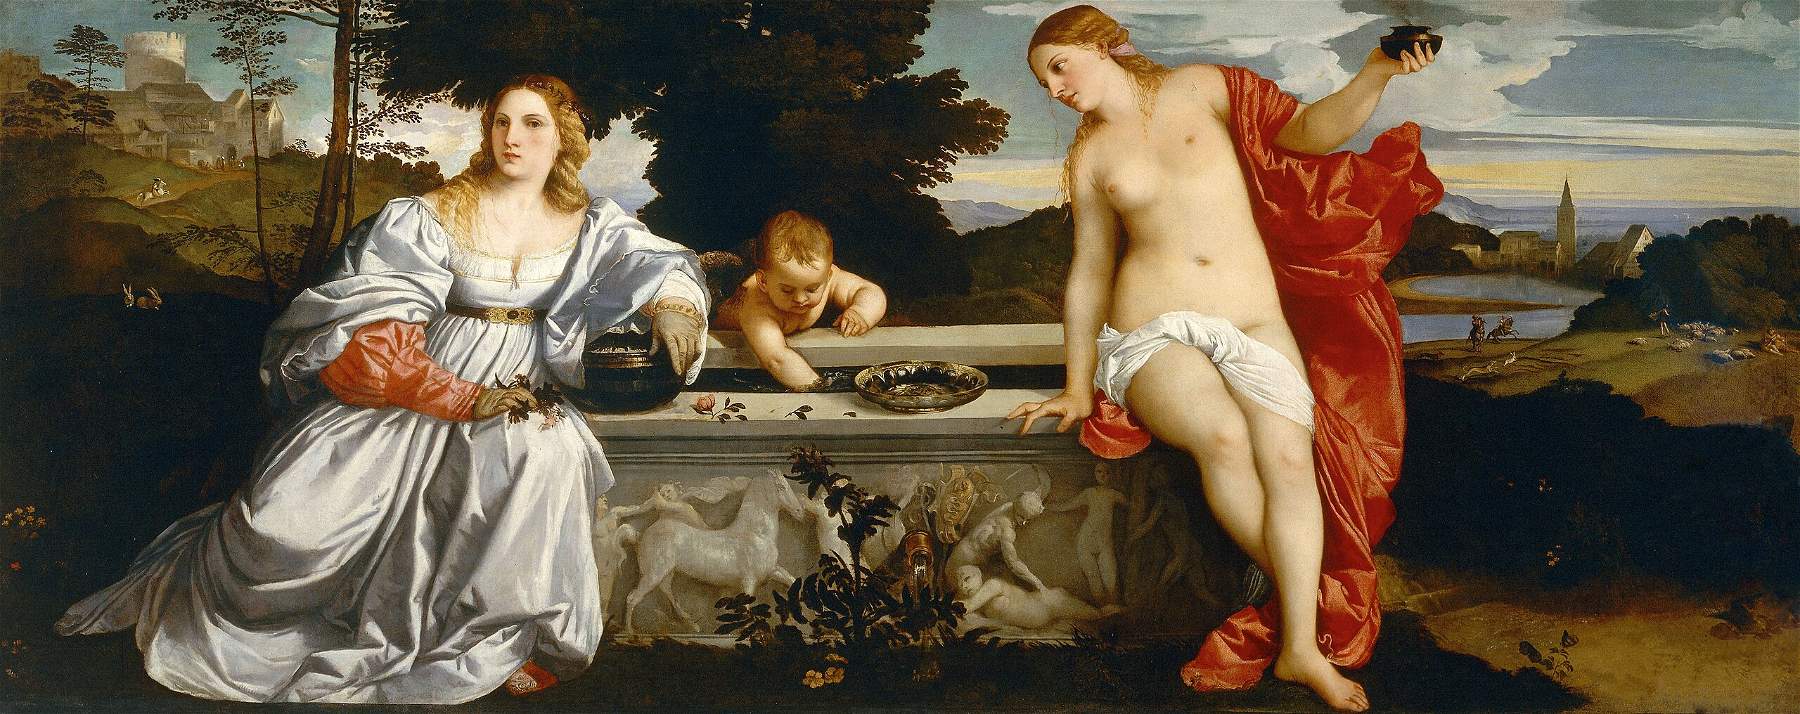 Titian Vecellio: life, major works, art